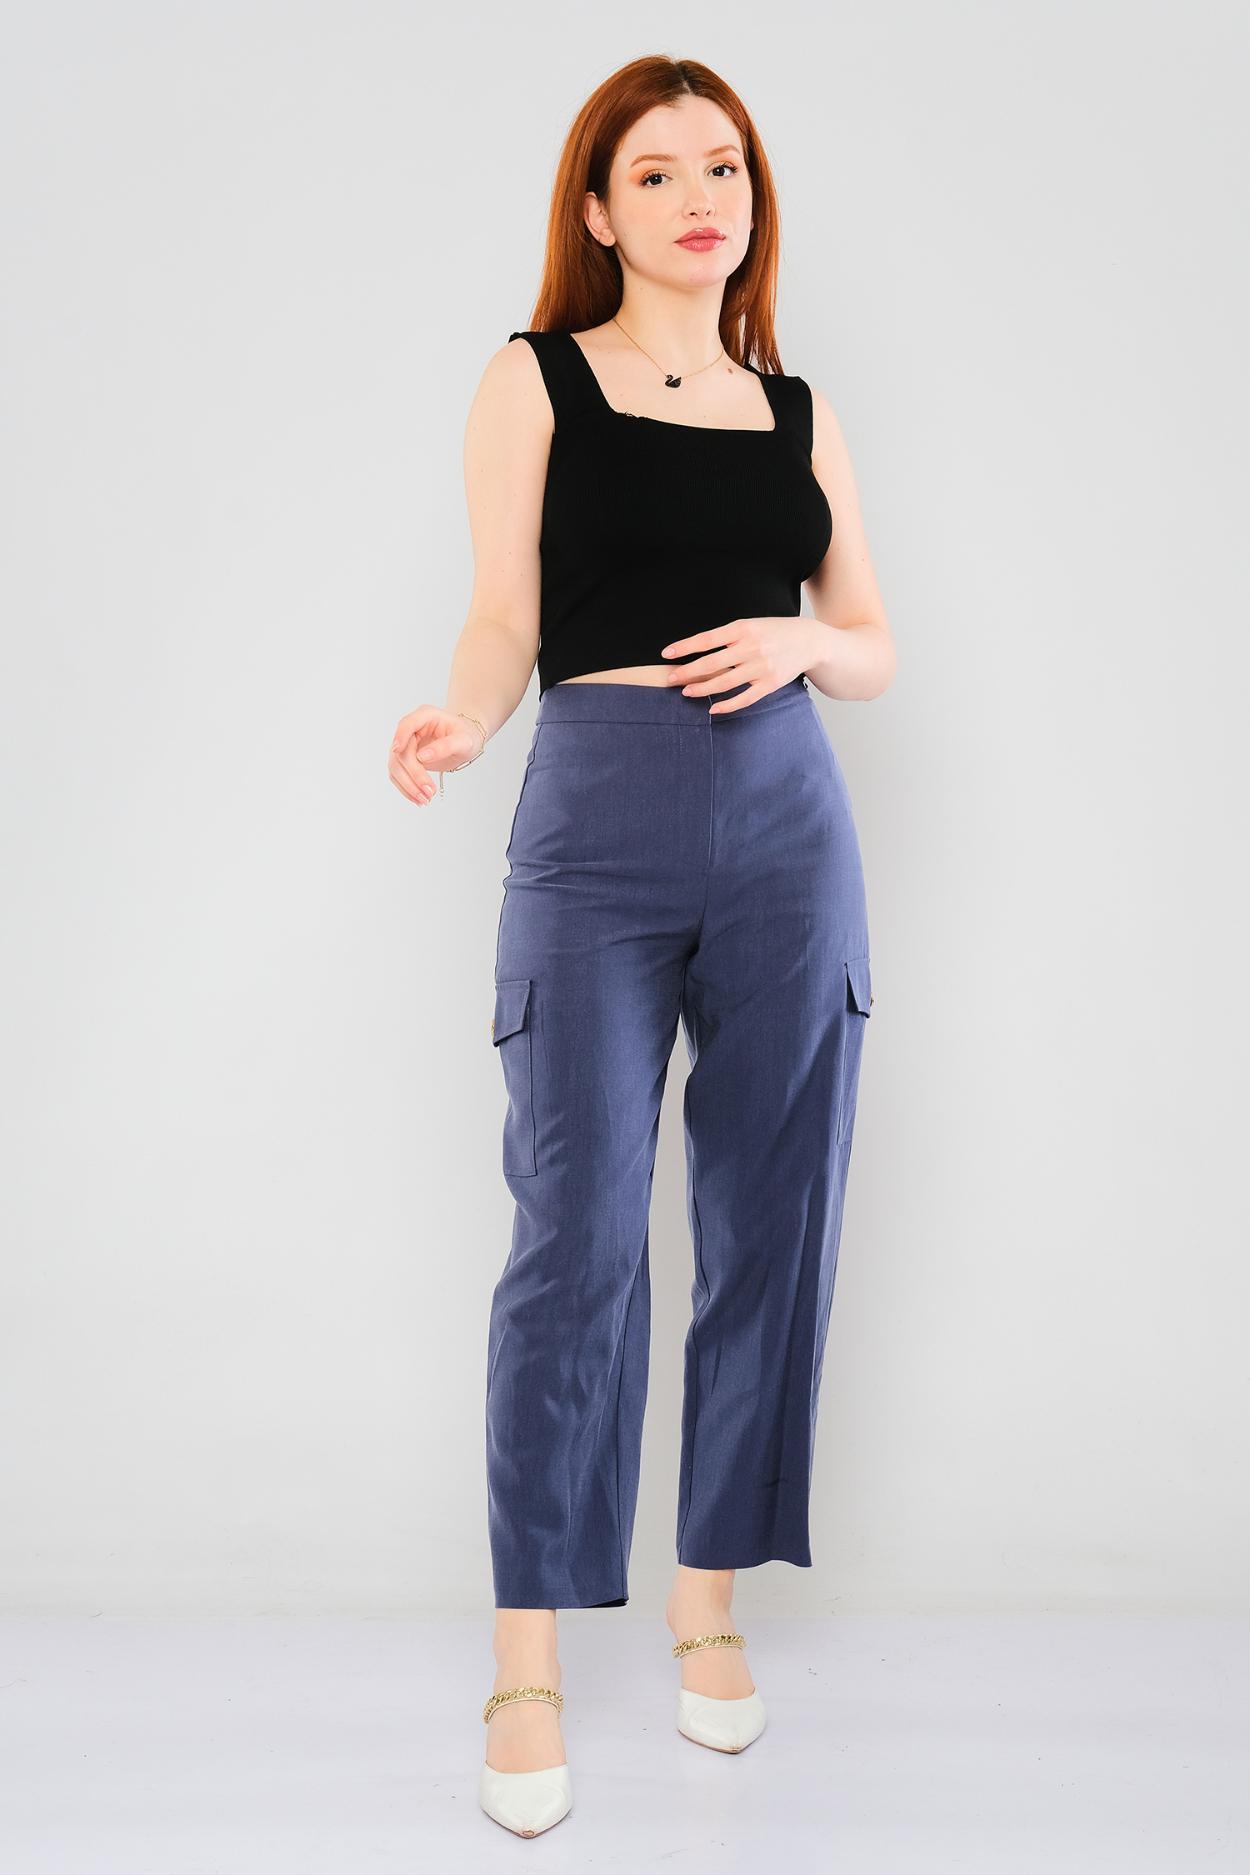 Women trousers model 166963 Italy Moda Pants, Trousers, Shorts Wholesale  Clothing Matterhorn